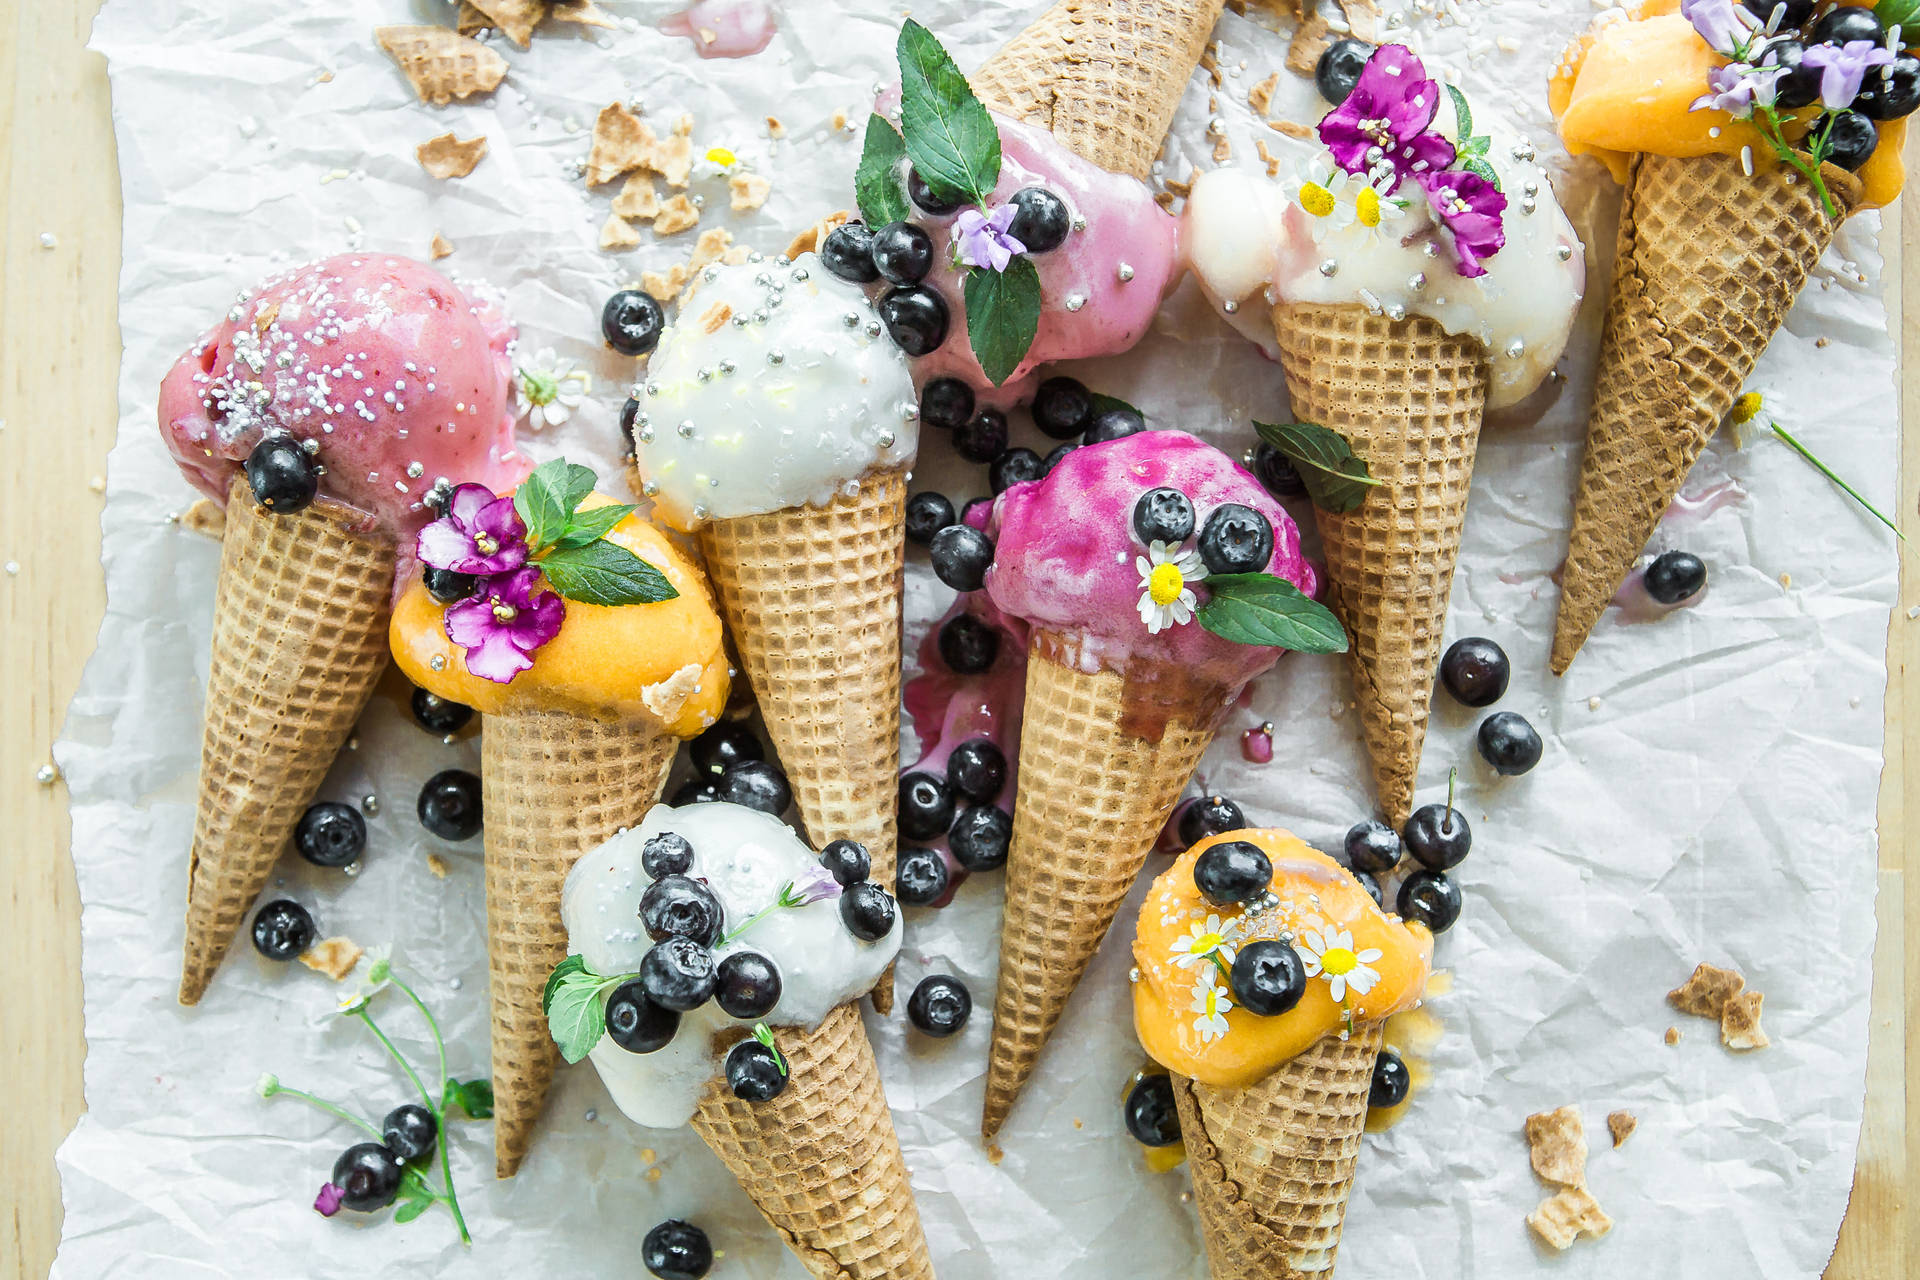 Ice Cream Scoops With Blackberries